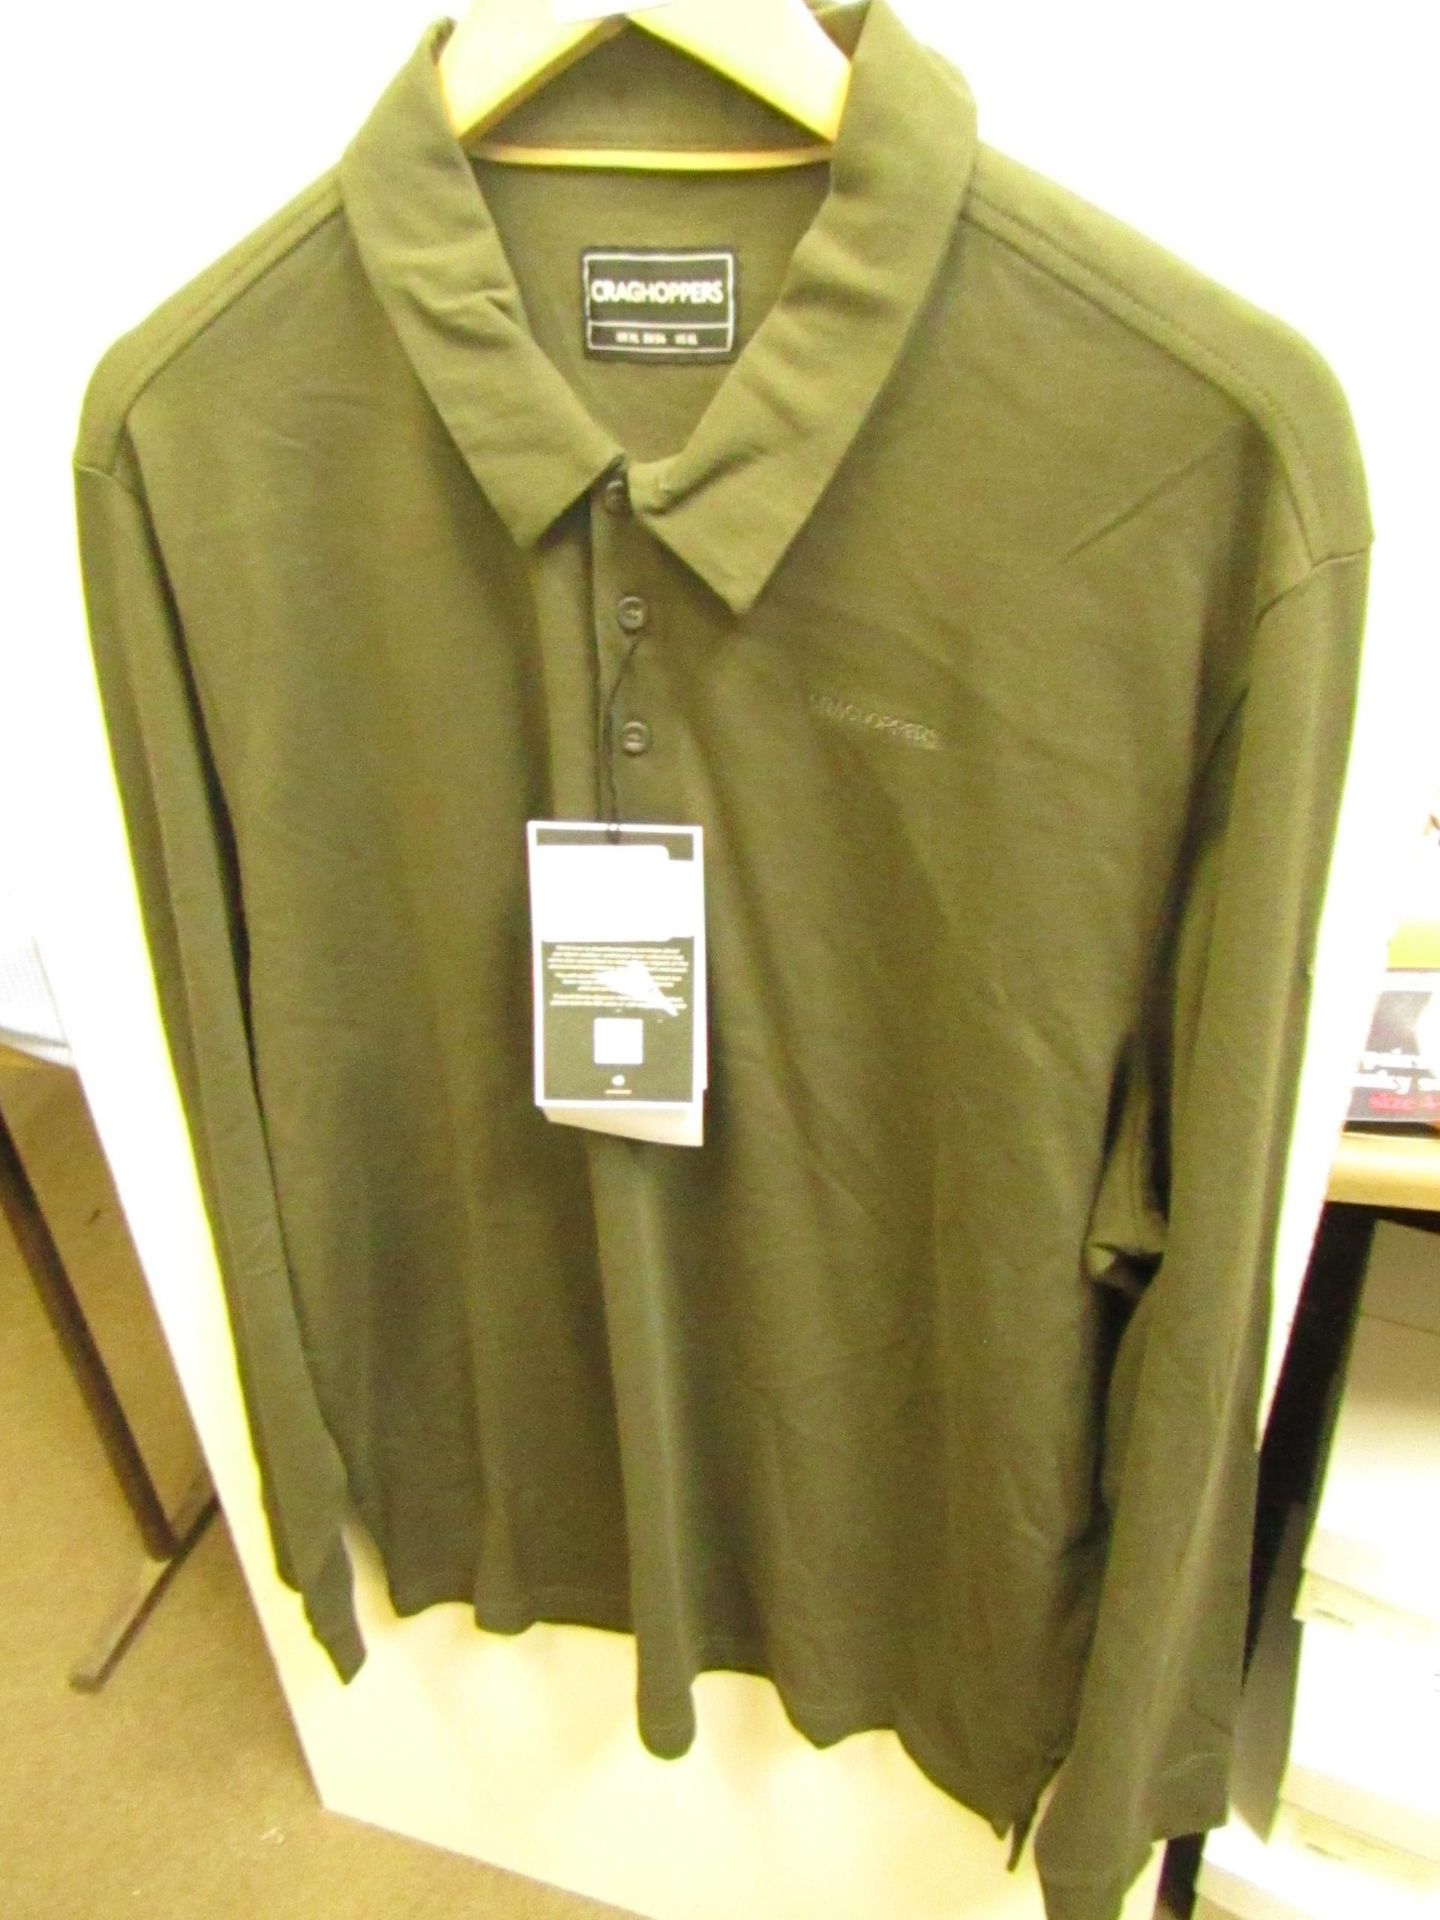 Craghopper Bryson Long Sleeve Polo Shirt, new size XL, RRP £45